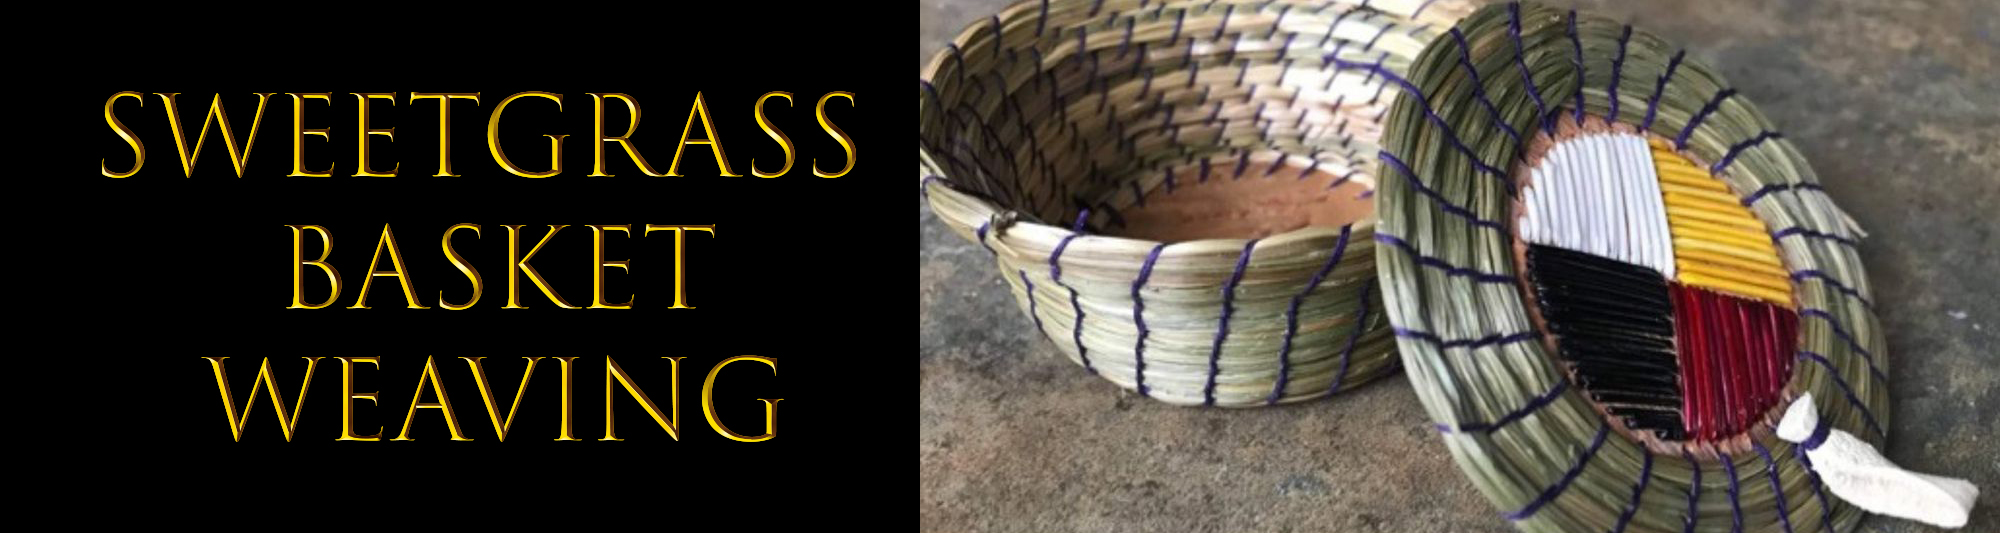 Sweetgrass Basket Weaving